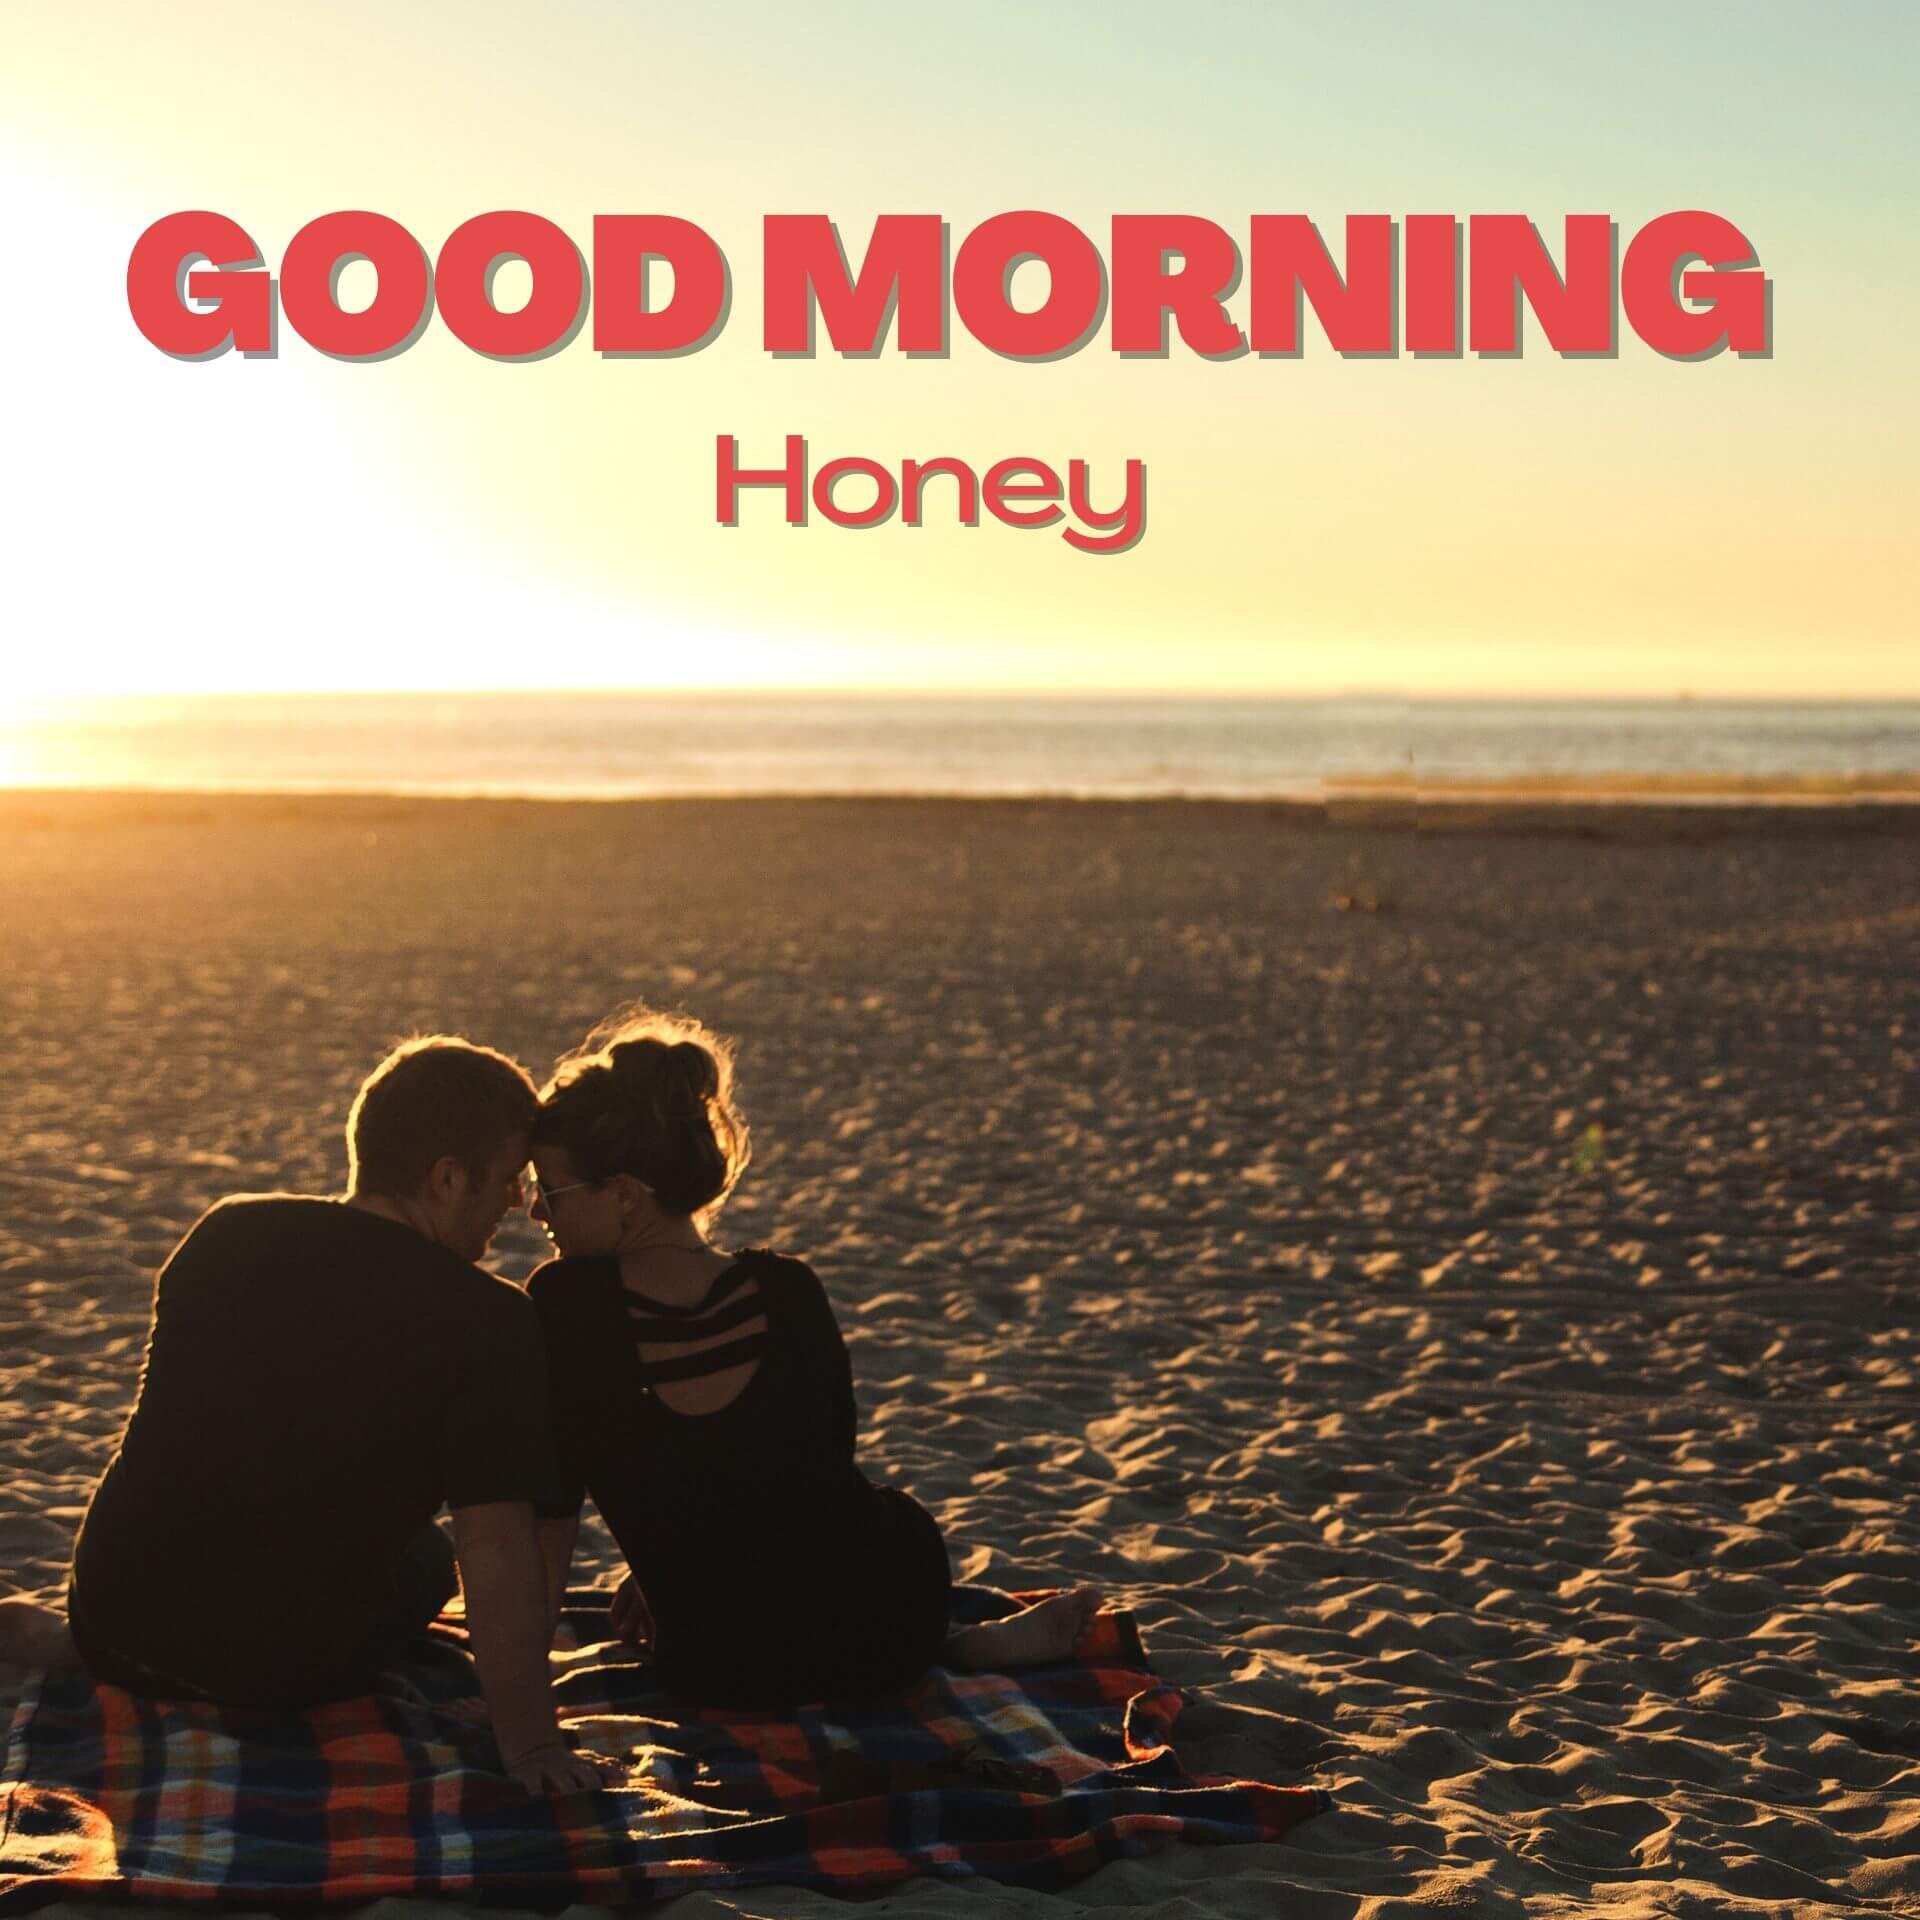 Good Morning Honey Wallpaper HD Download